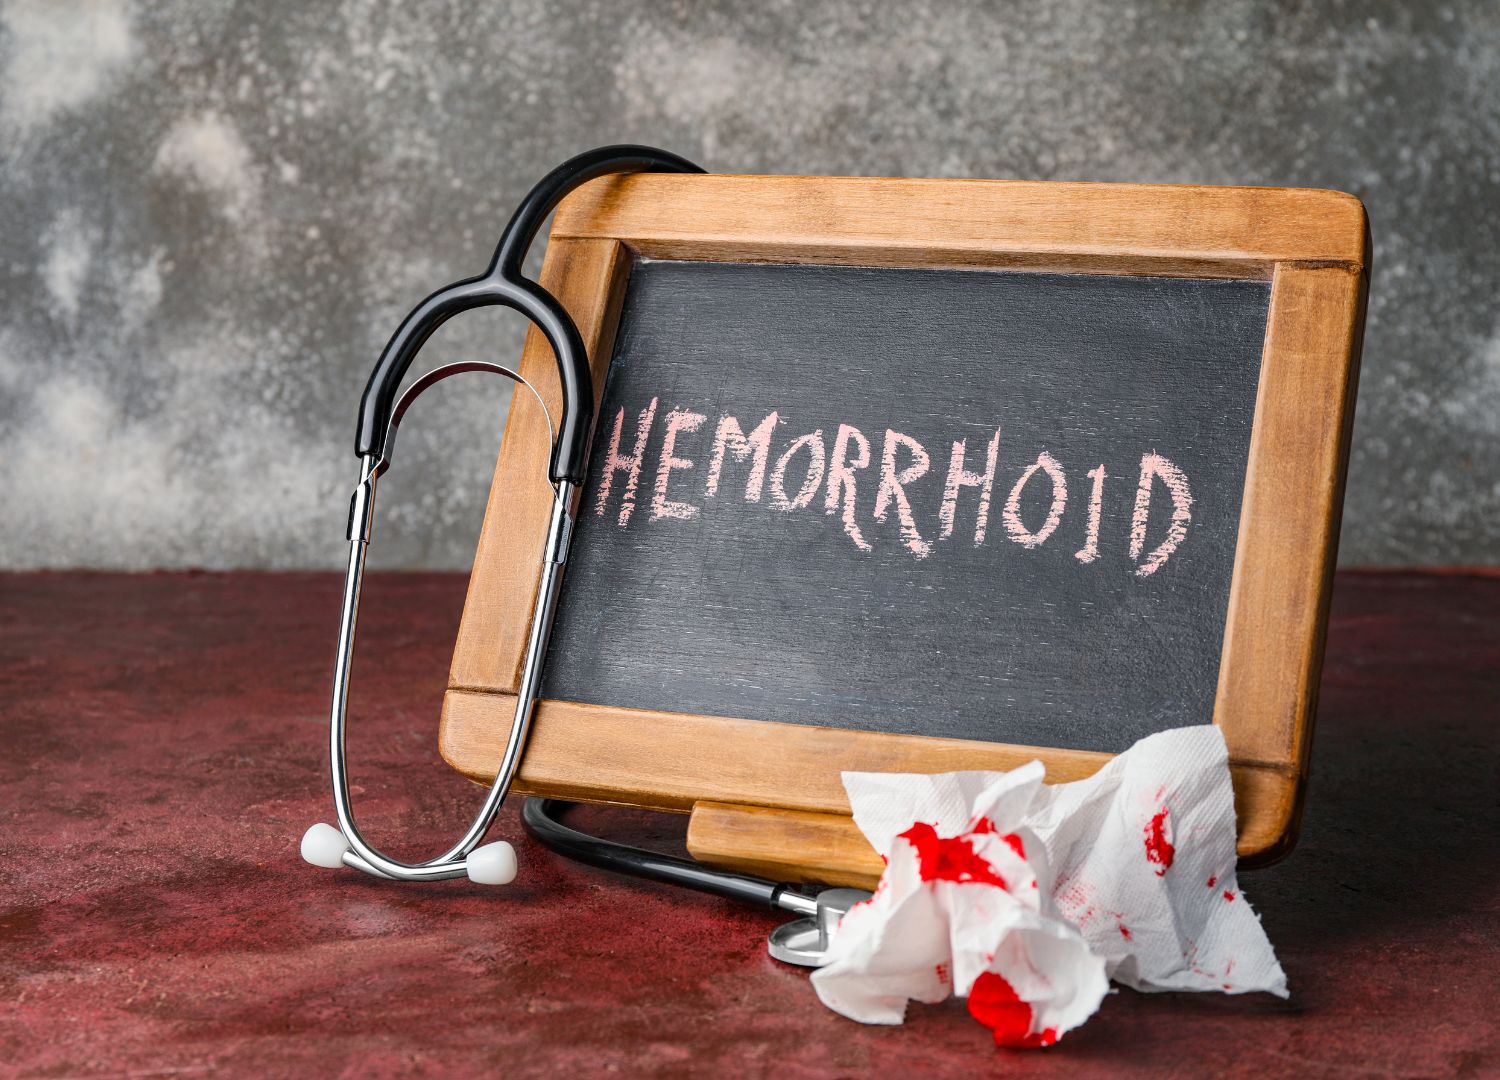 "Hemorrhoids: Bleeding from my back passage  (Pidgin)"